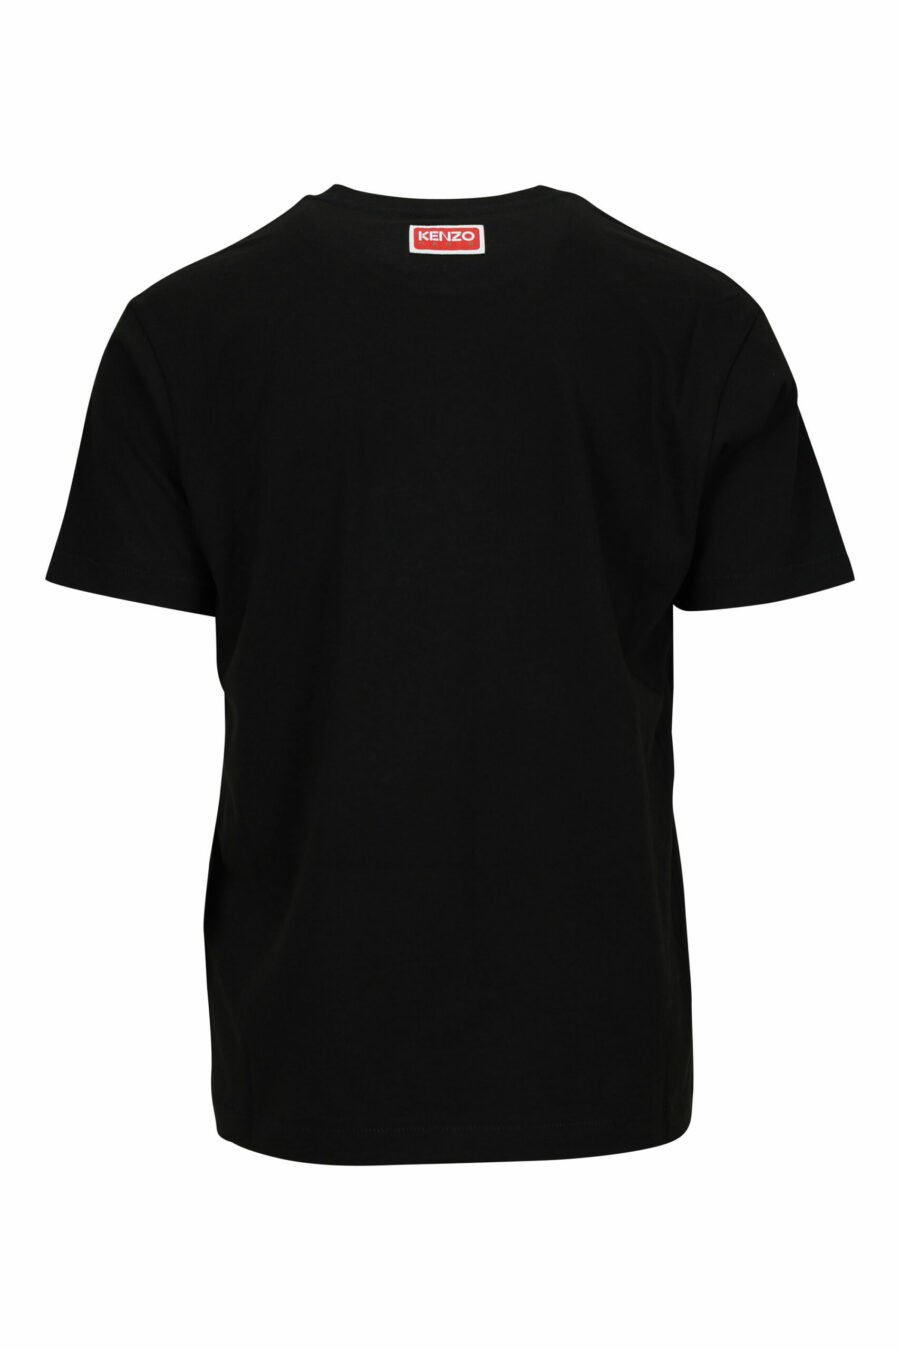 Camiseta negra "oversize" logo grande tigre relieve - 3612230568068 1 scaled